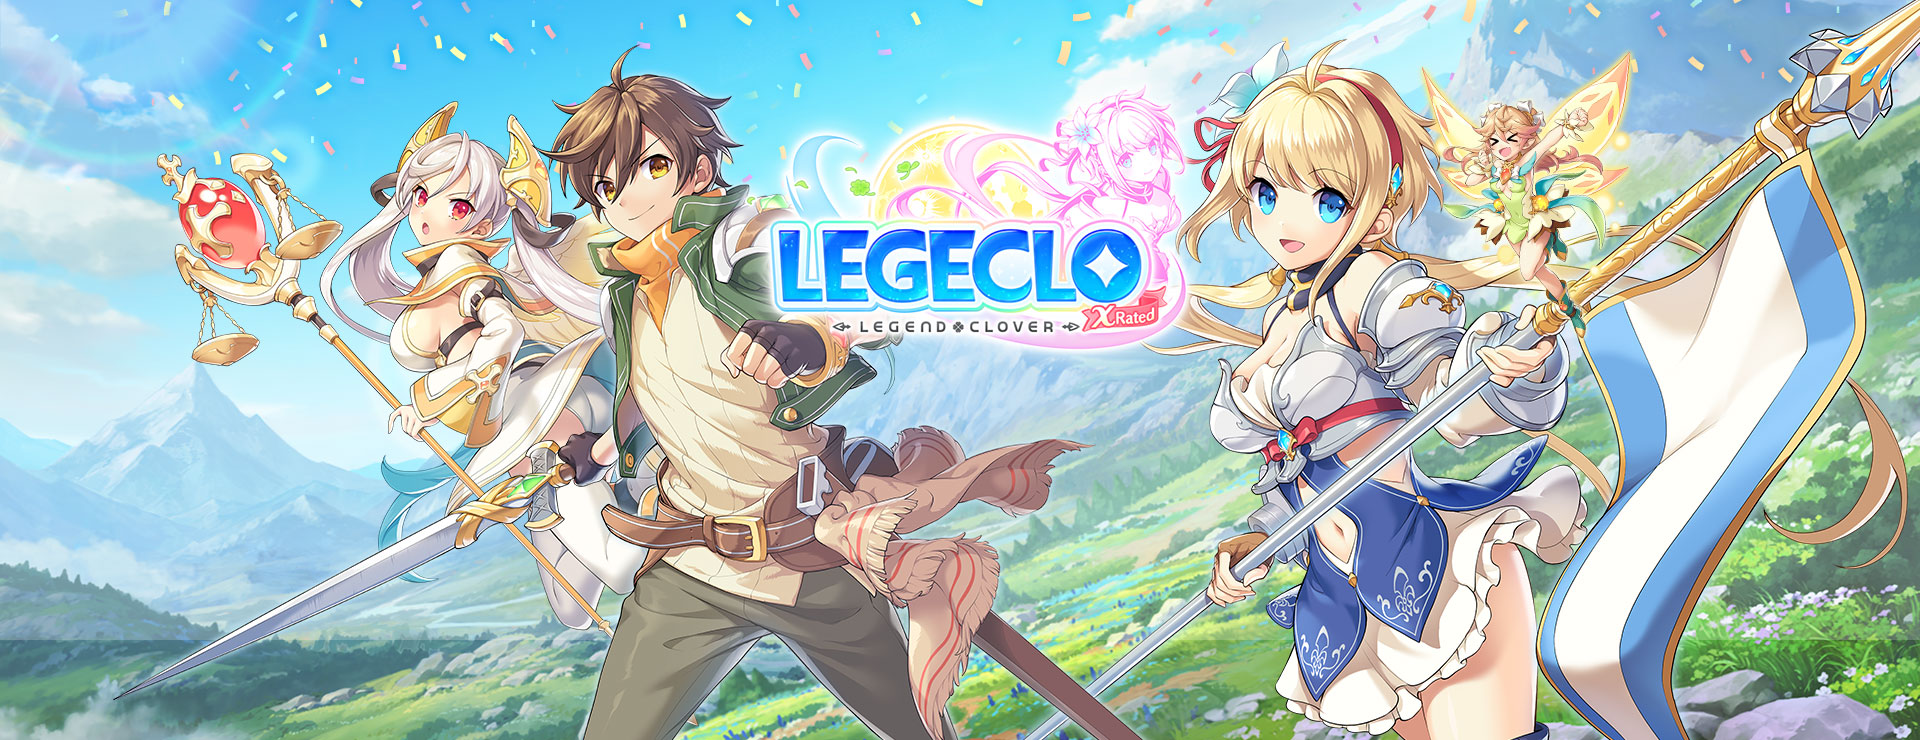 Legeclo: Legend Clover X Rated - Rundenbasiertes RPG Spiel